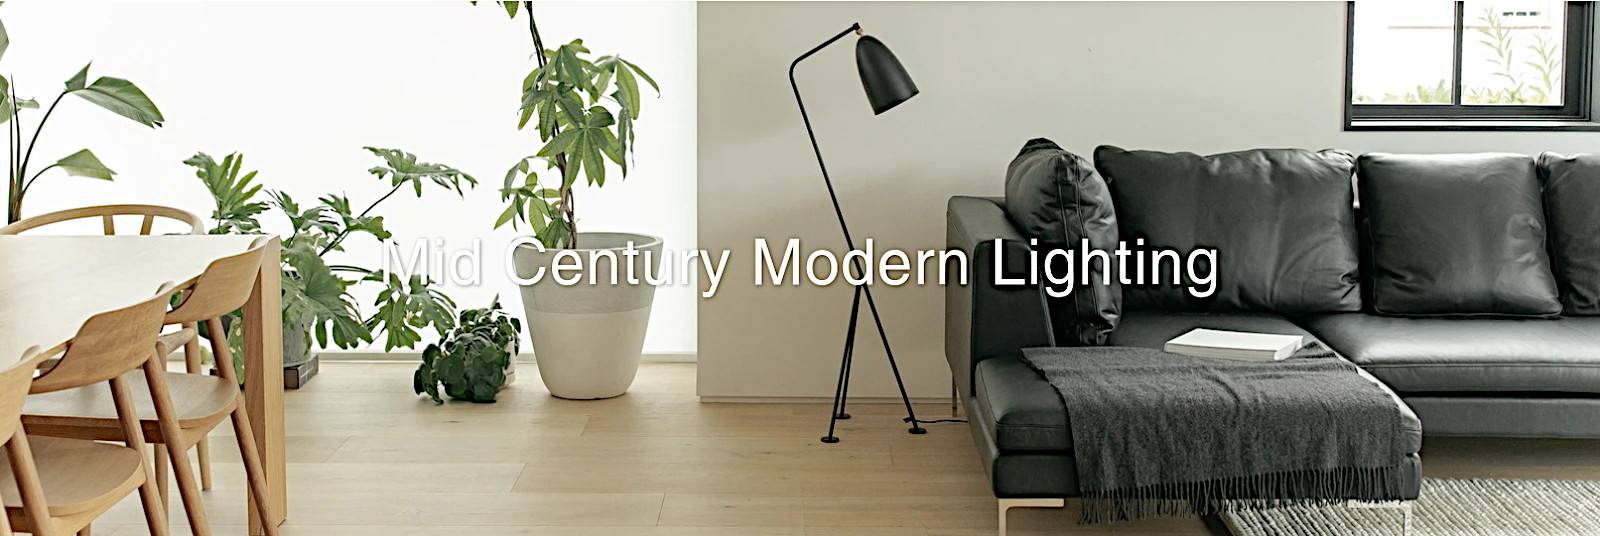 mid century modern lighting bargain